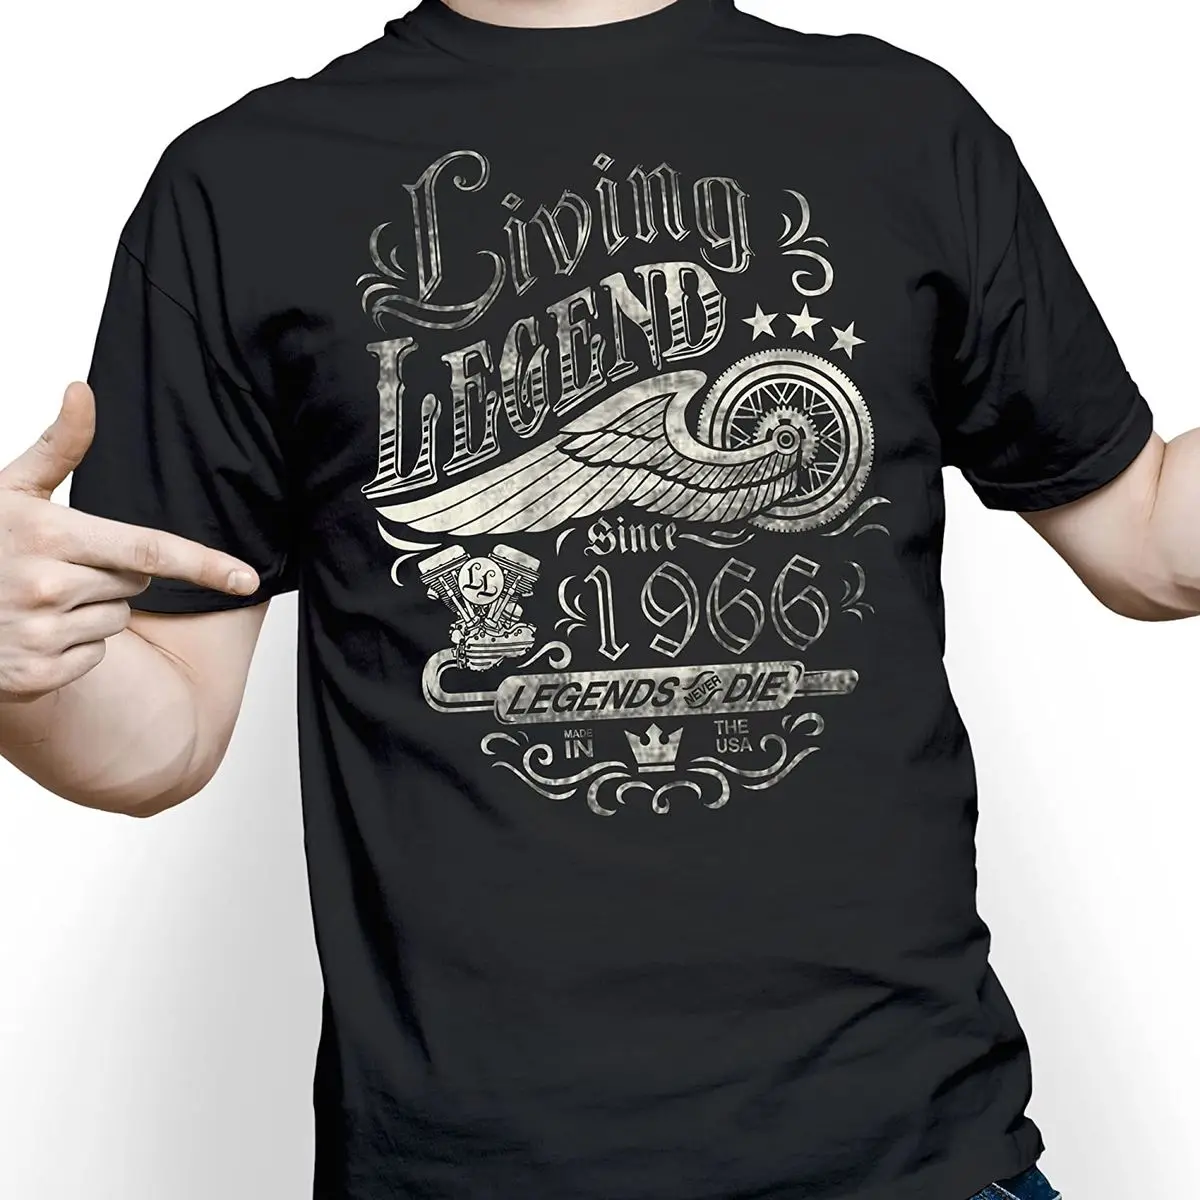 

Fashion Cool Men T shirt 55th Birthday Gift Shirt - Living Legend 1966 Legends Never Die Women Funny print tshirt